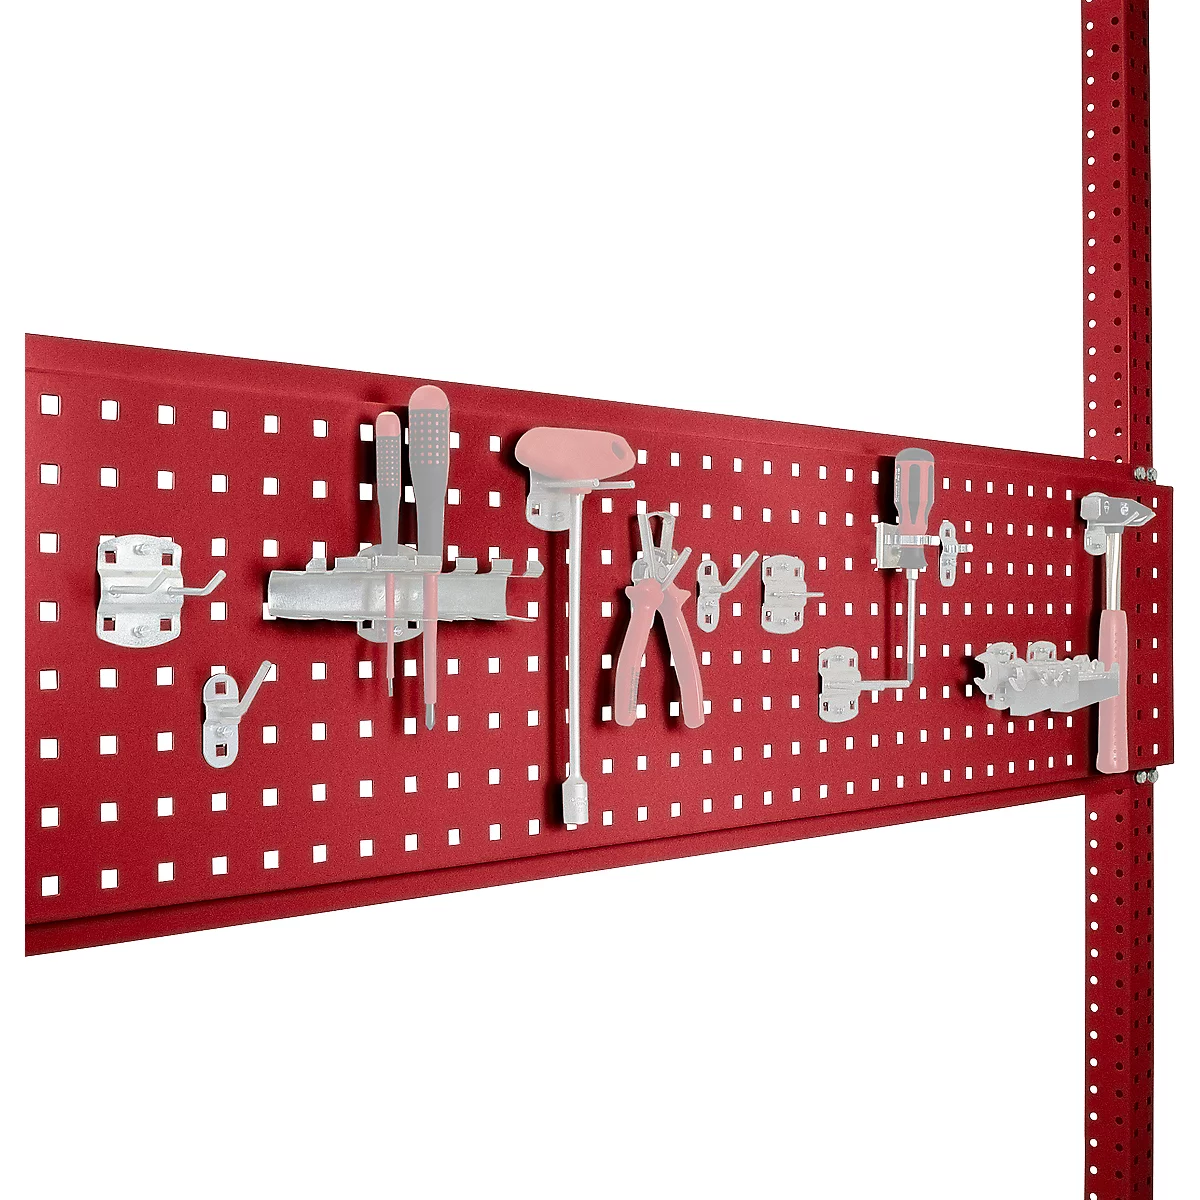 Placa perforada para herramientas, para anchura de mesa 1500 mm, para serie Universal/Profi, rojo rubí RAL 3003